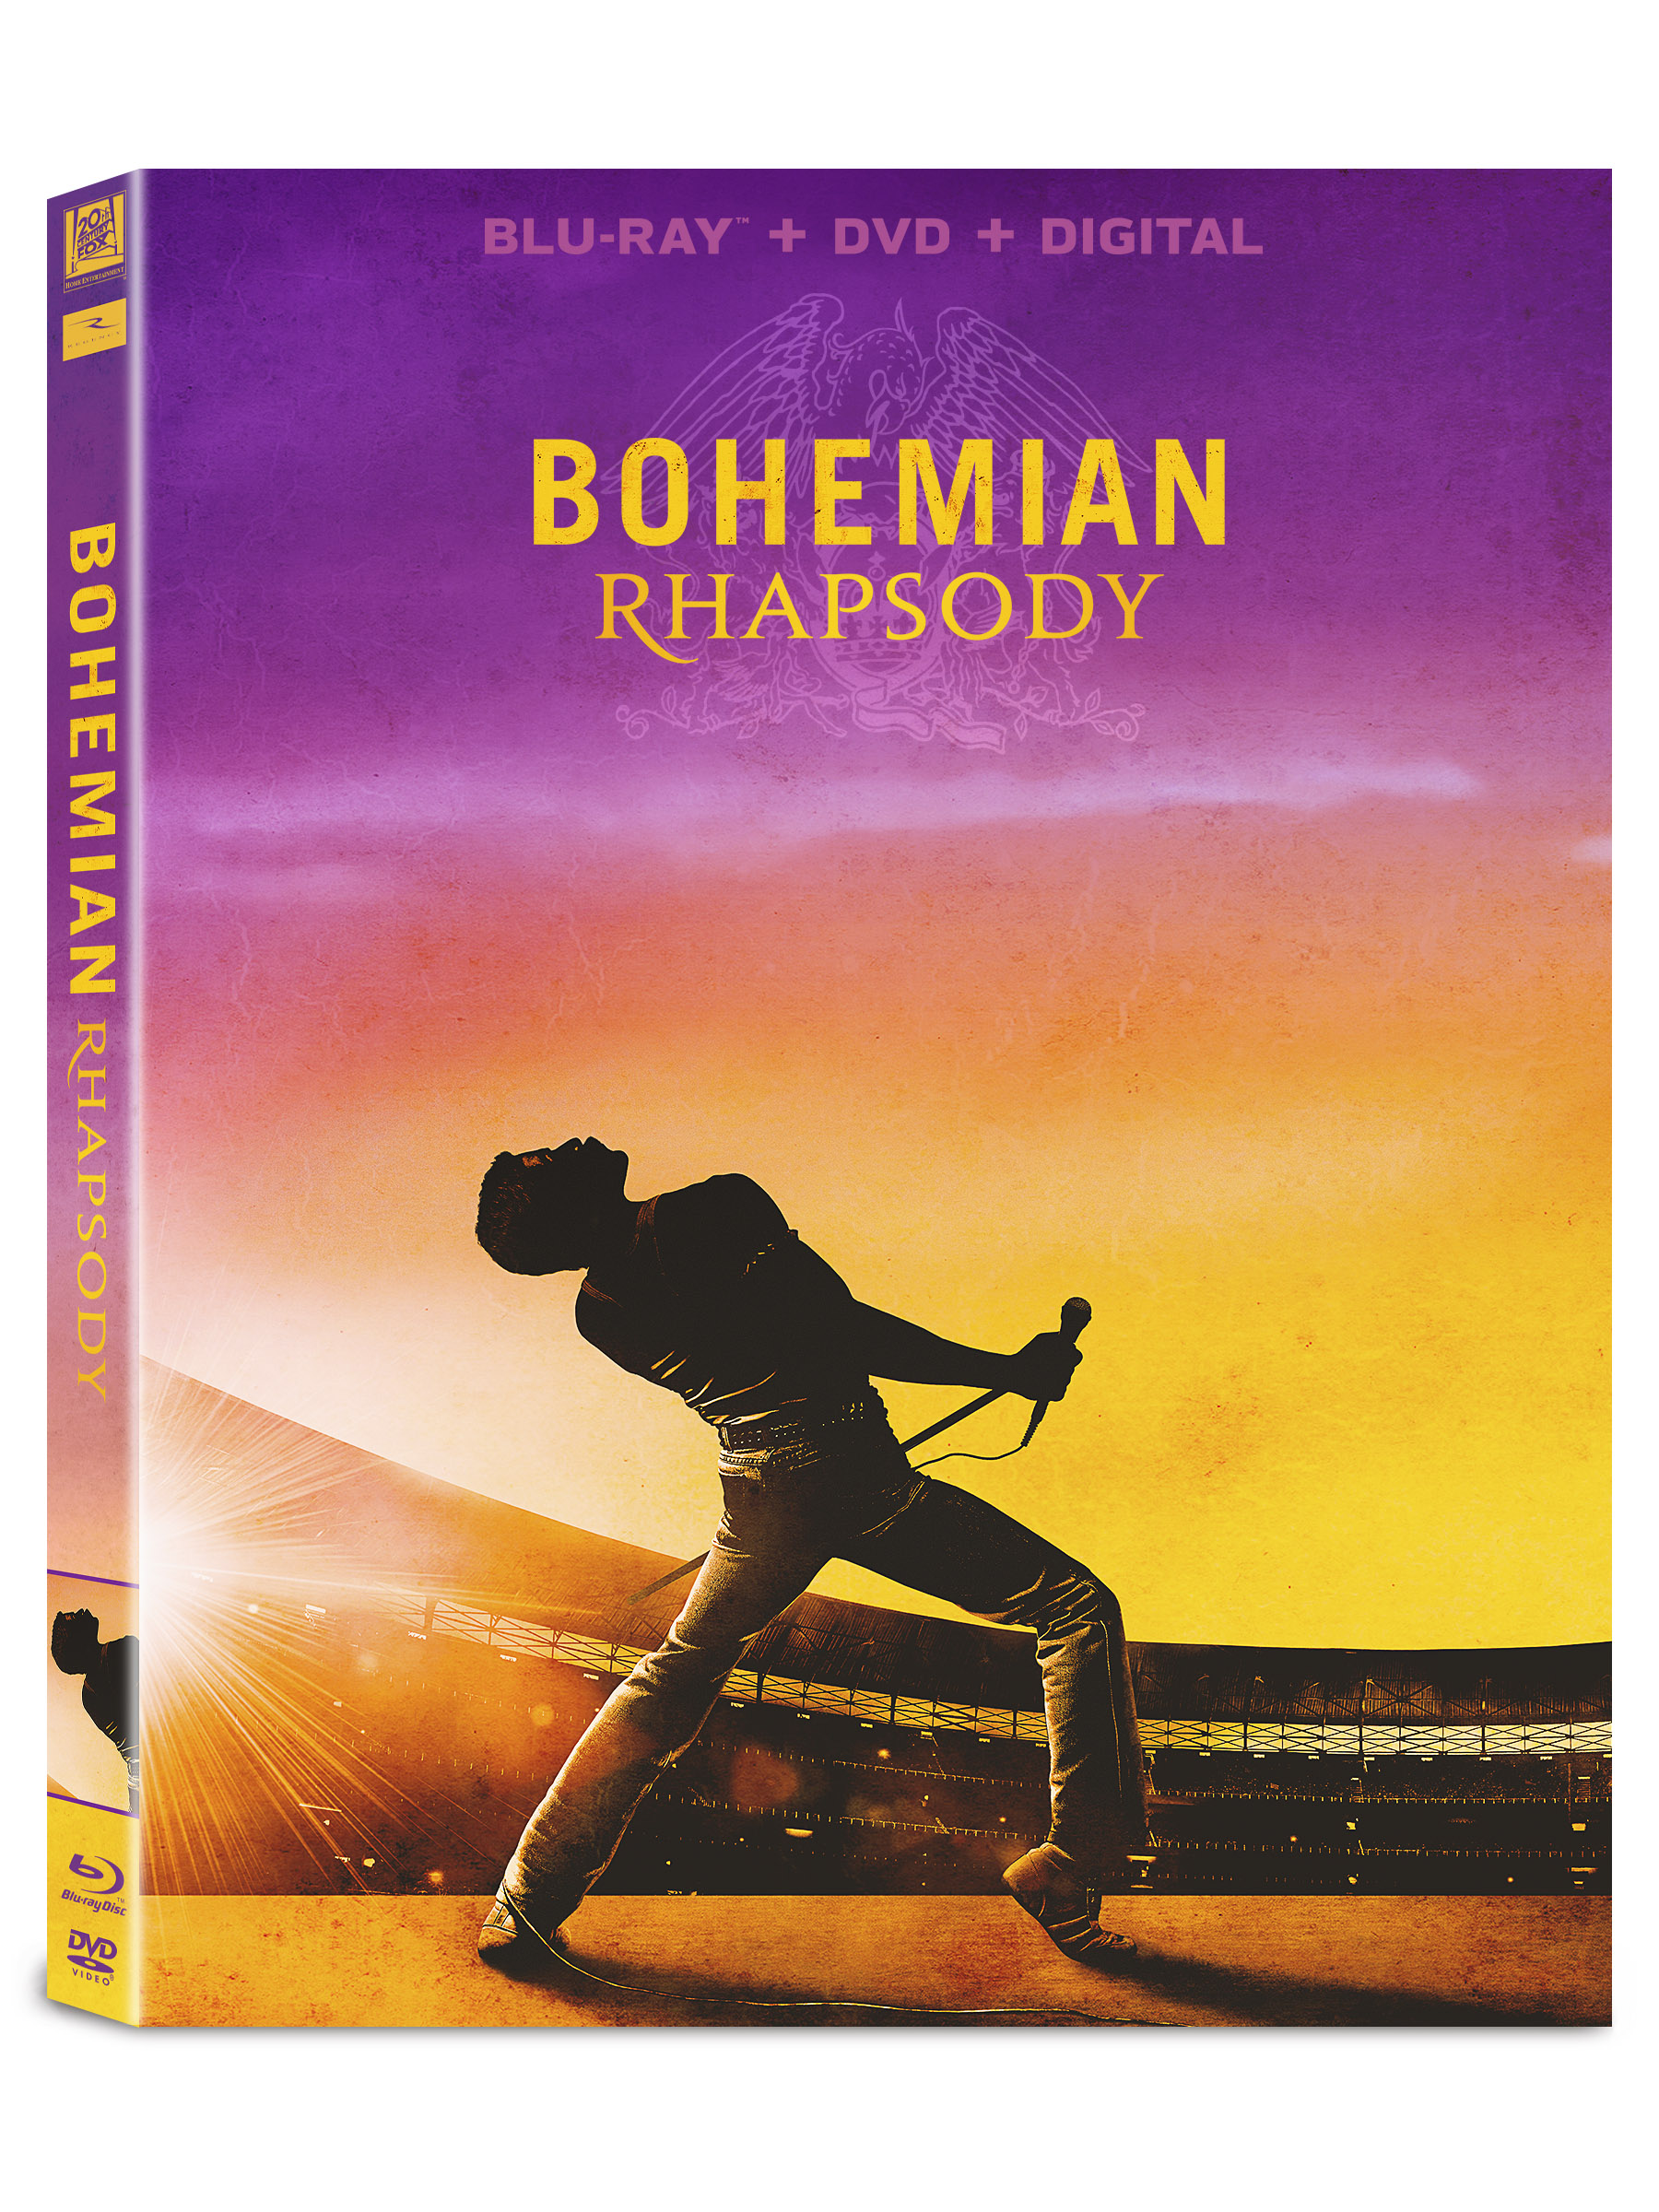 Bohemian Rhapsody Blu-Ray Combo Pack cover (20th Century Fox Home Entertainment)